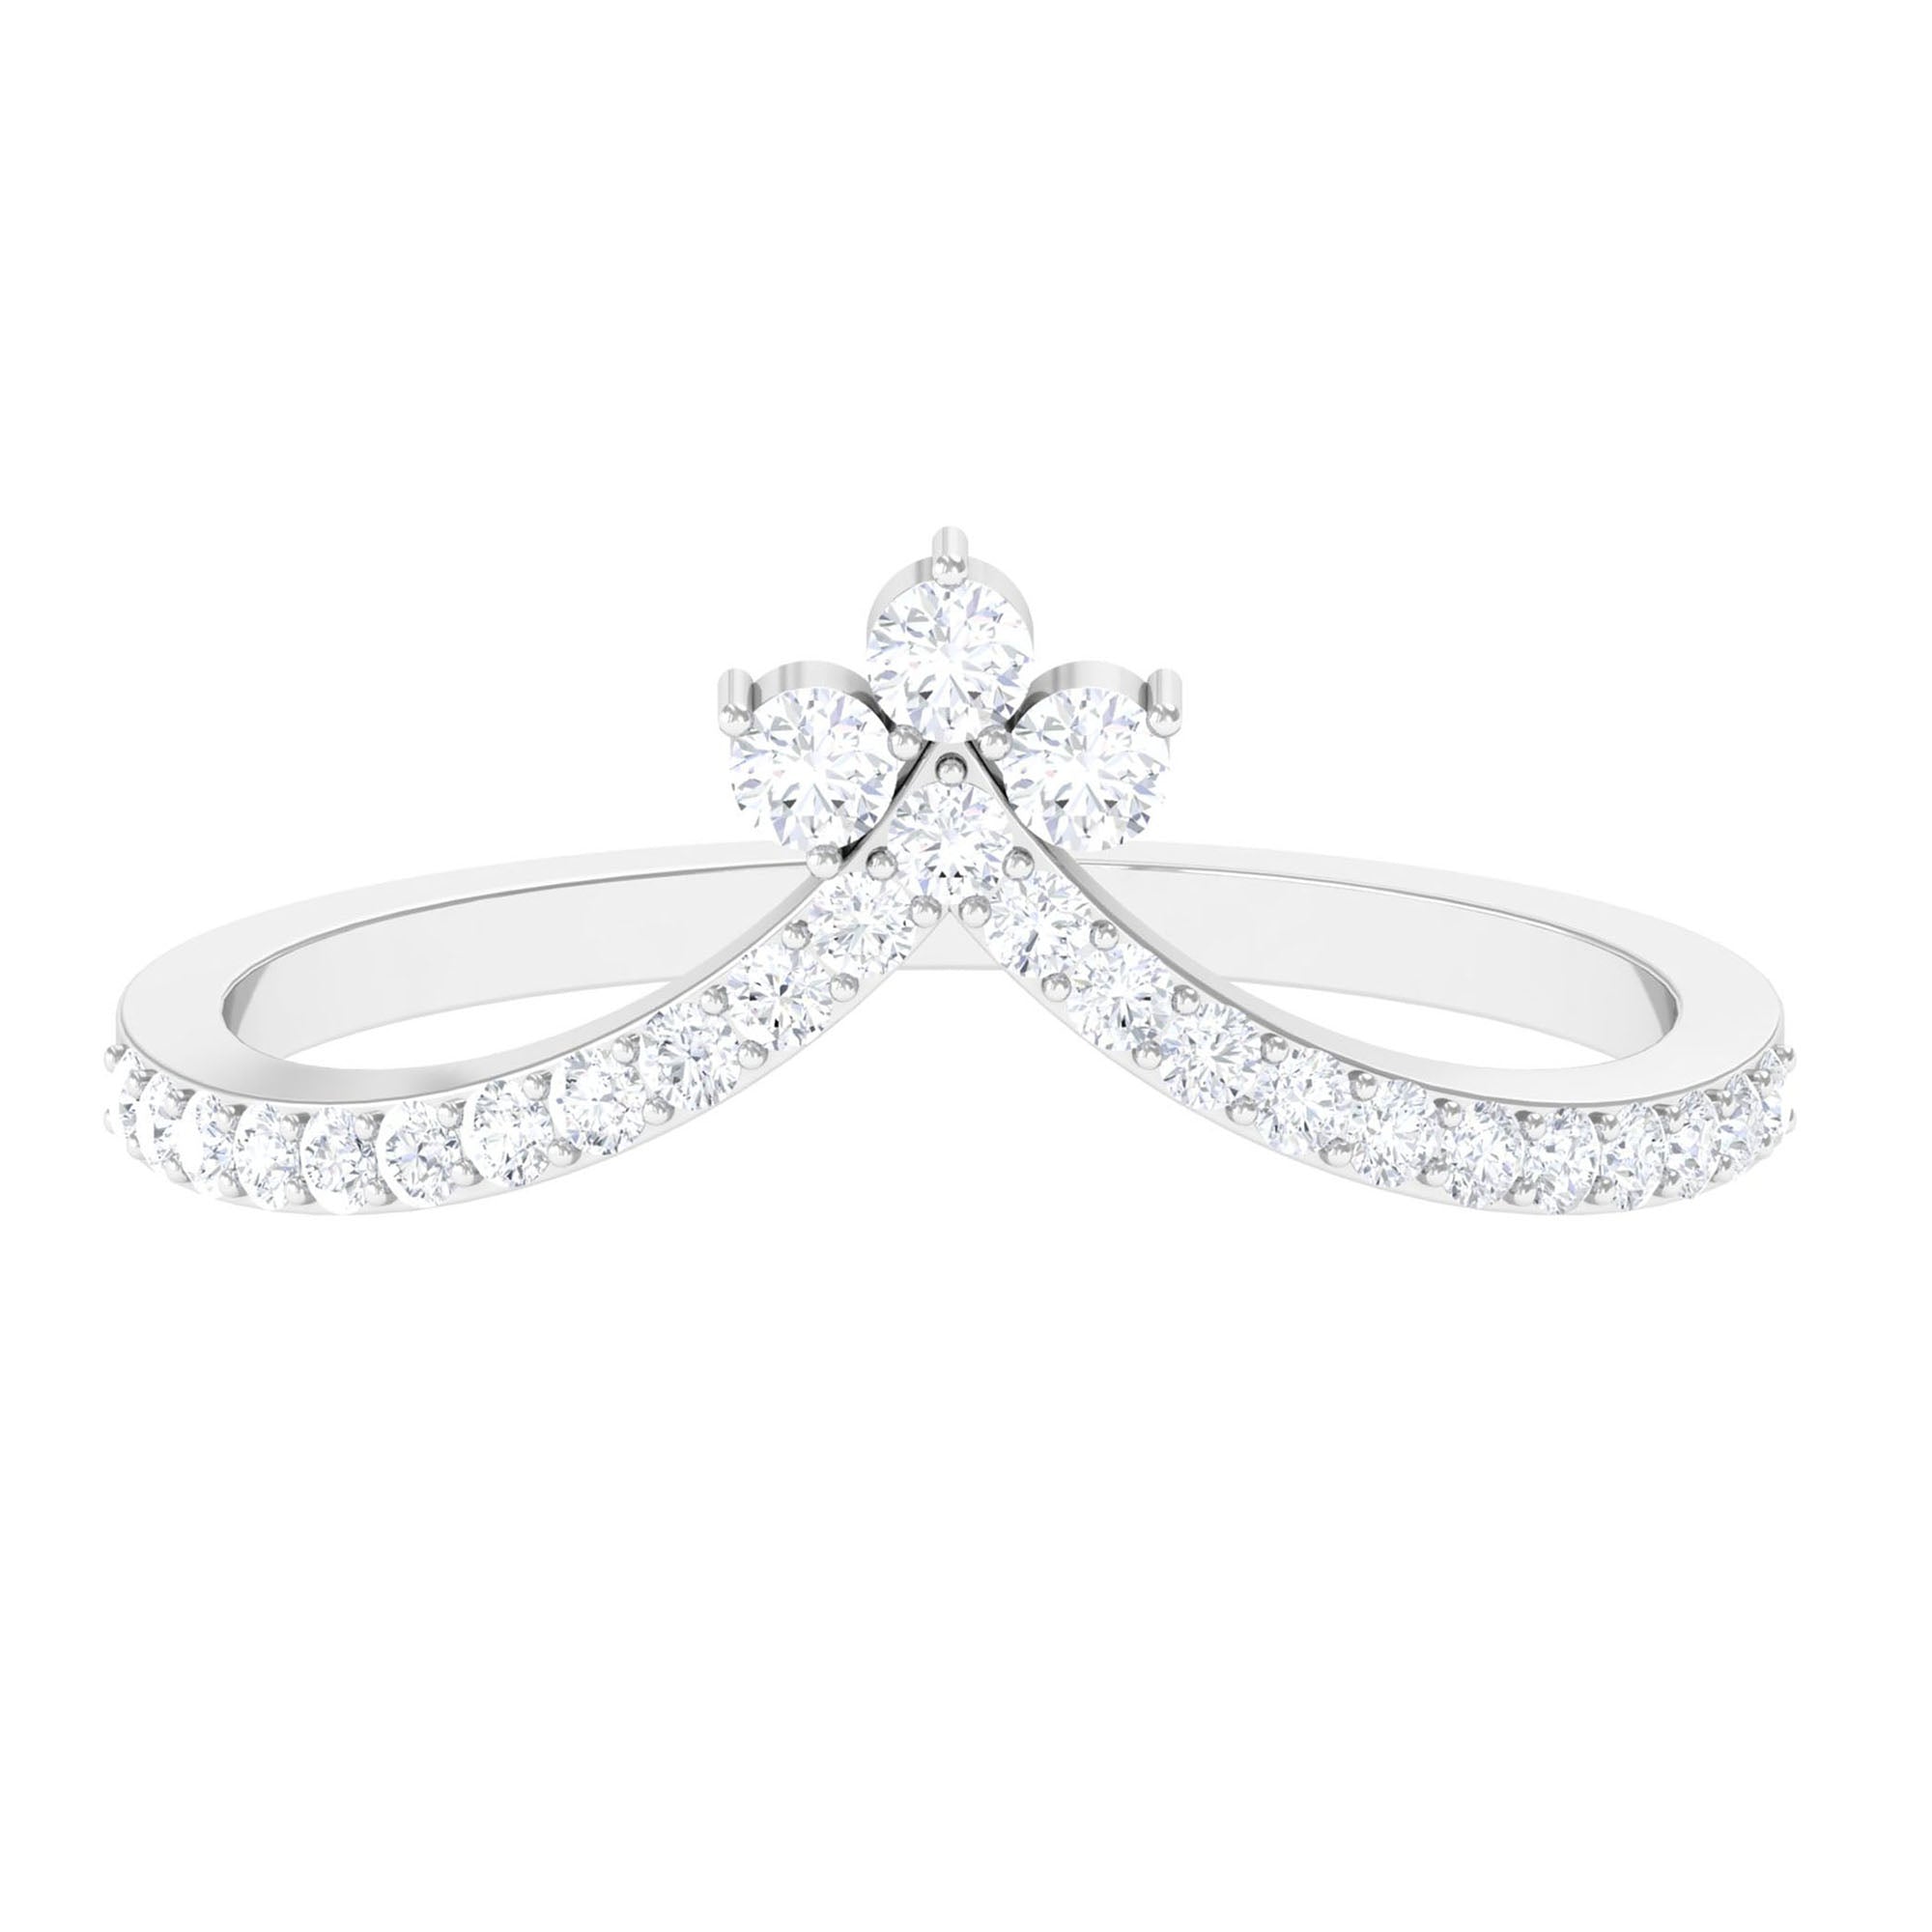 1/4 CT Moissanite Chevron Wedding Ring Enhancer for Women Moissanite - ( D-VS1 ) - Color and Clarity - Rosec Jewels